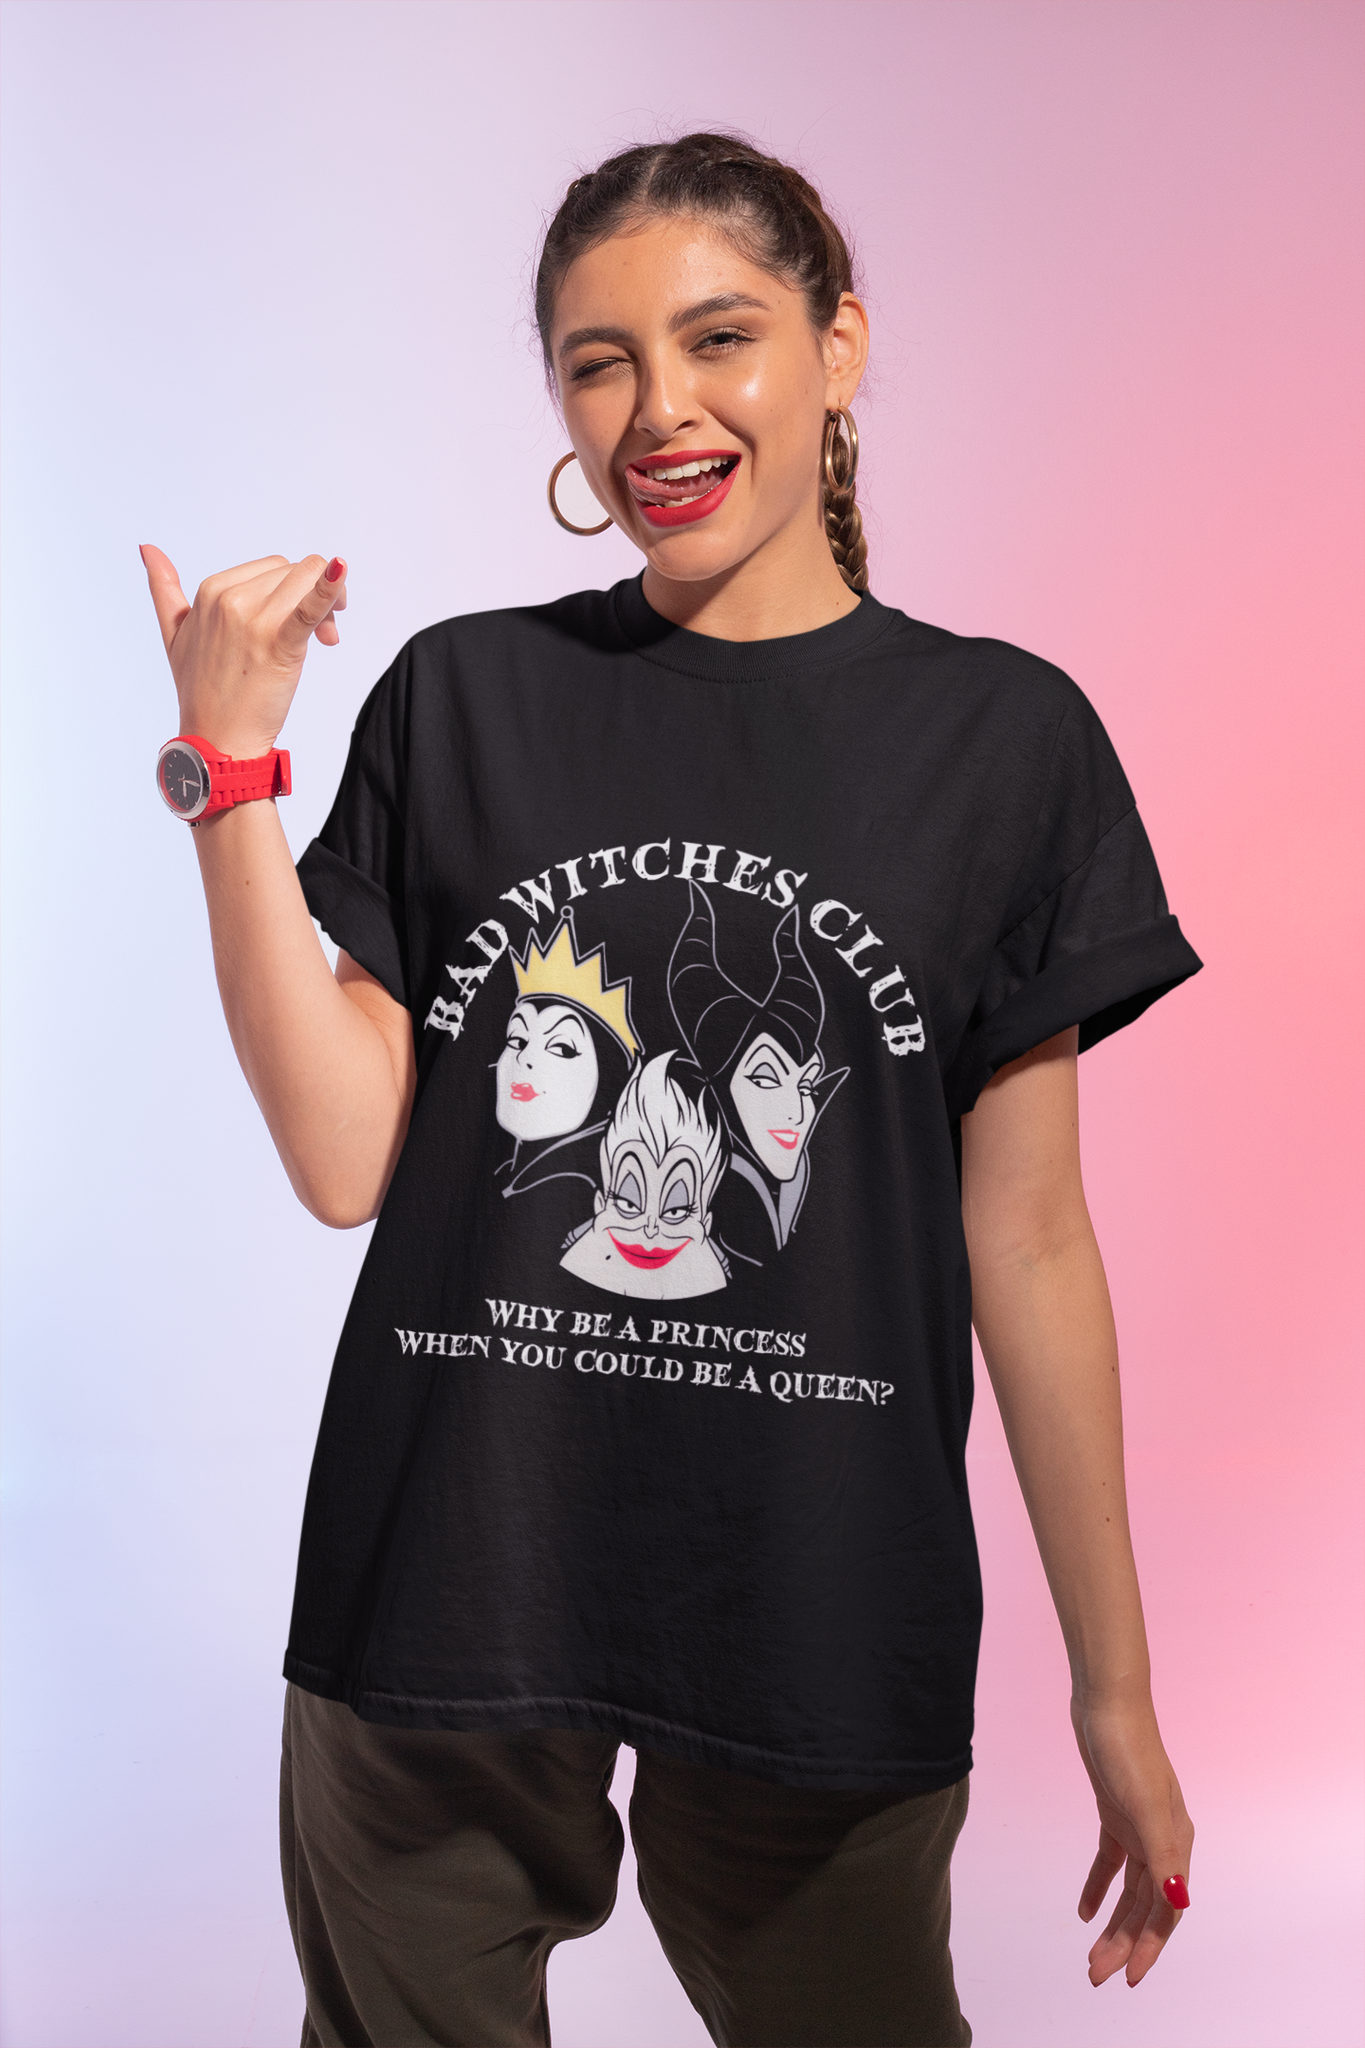 Disney Maleficent T Shirt, The Queen Ursula Maleficent T Shirt, Bad Witches Club Why Be A Princess Tshirt, Disney Villains Shirt